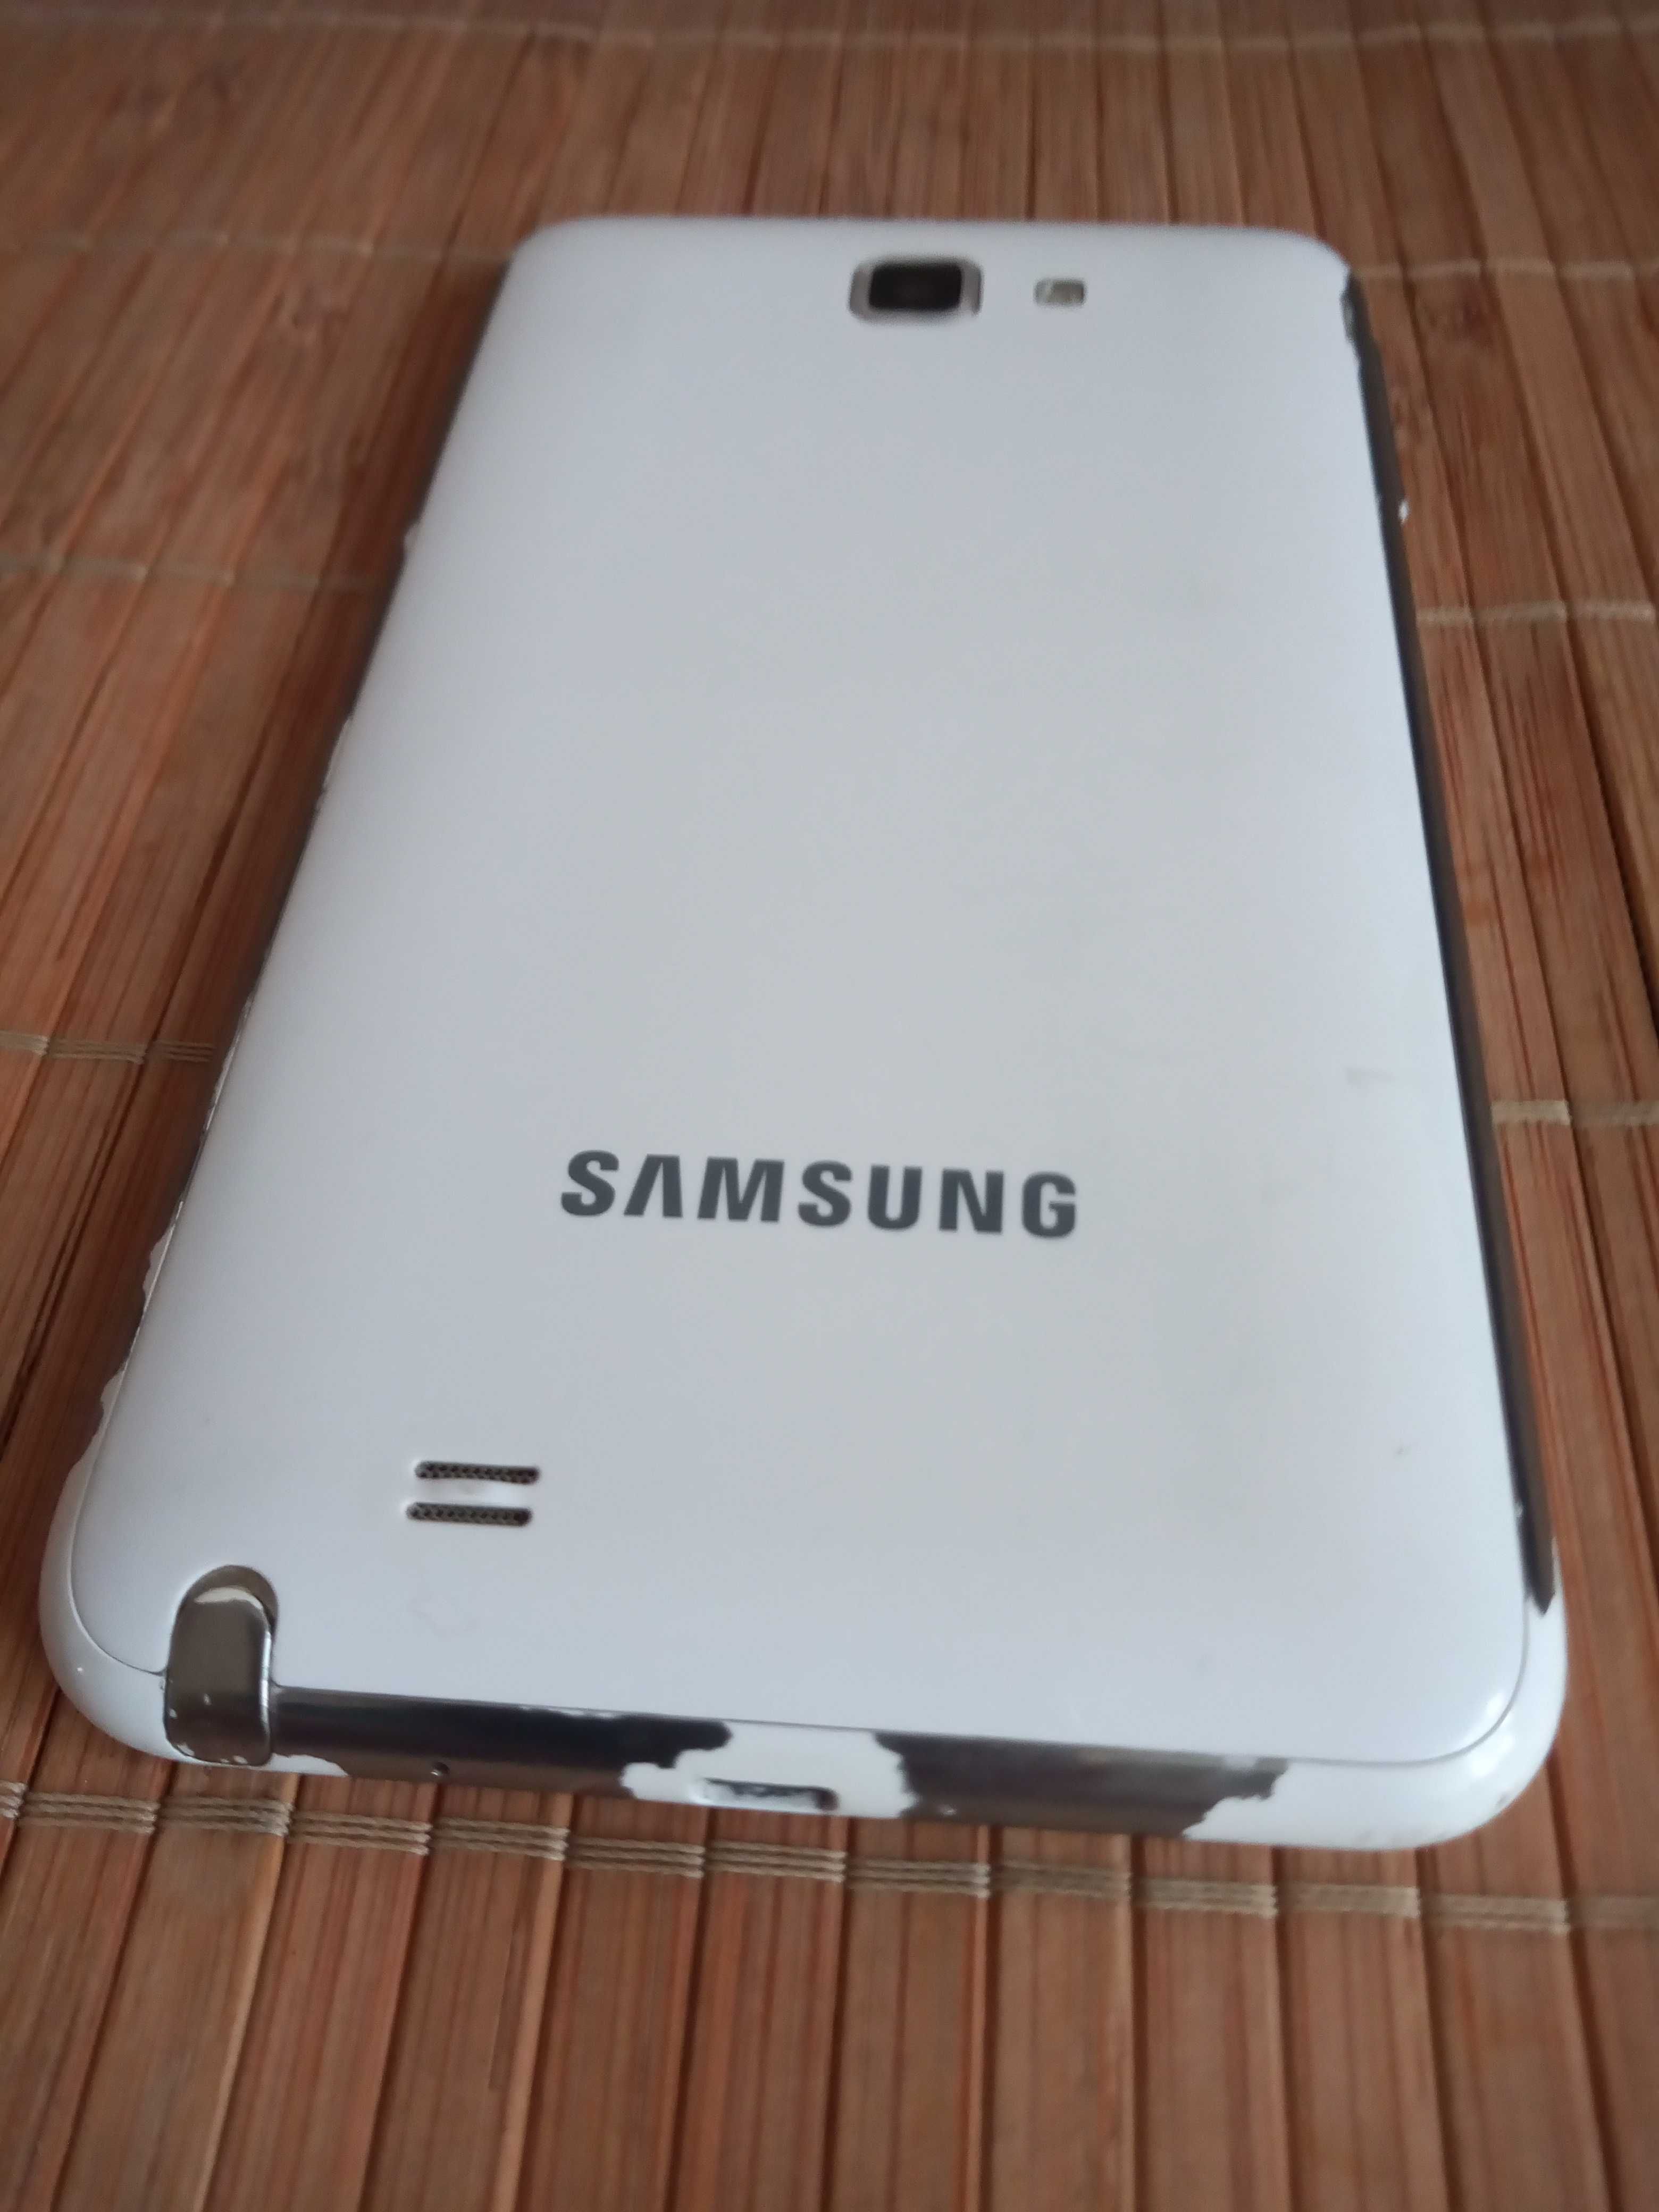 Samsung GALAXY Note GT-N7000*Biały*Wyświetlacz 5.3"*Super Amoled HD*.